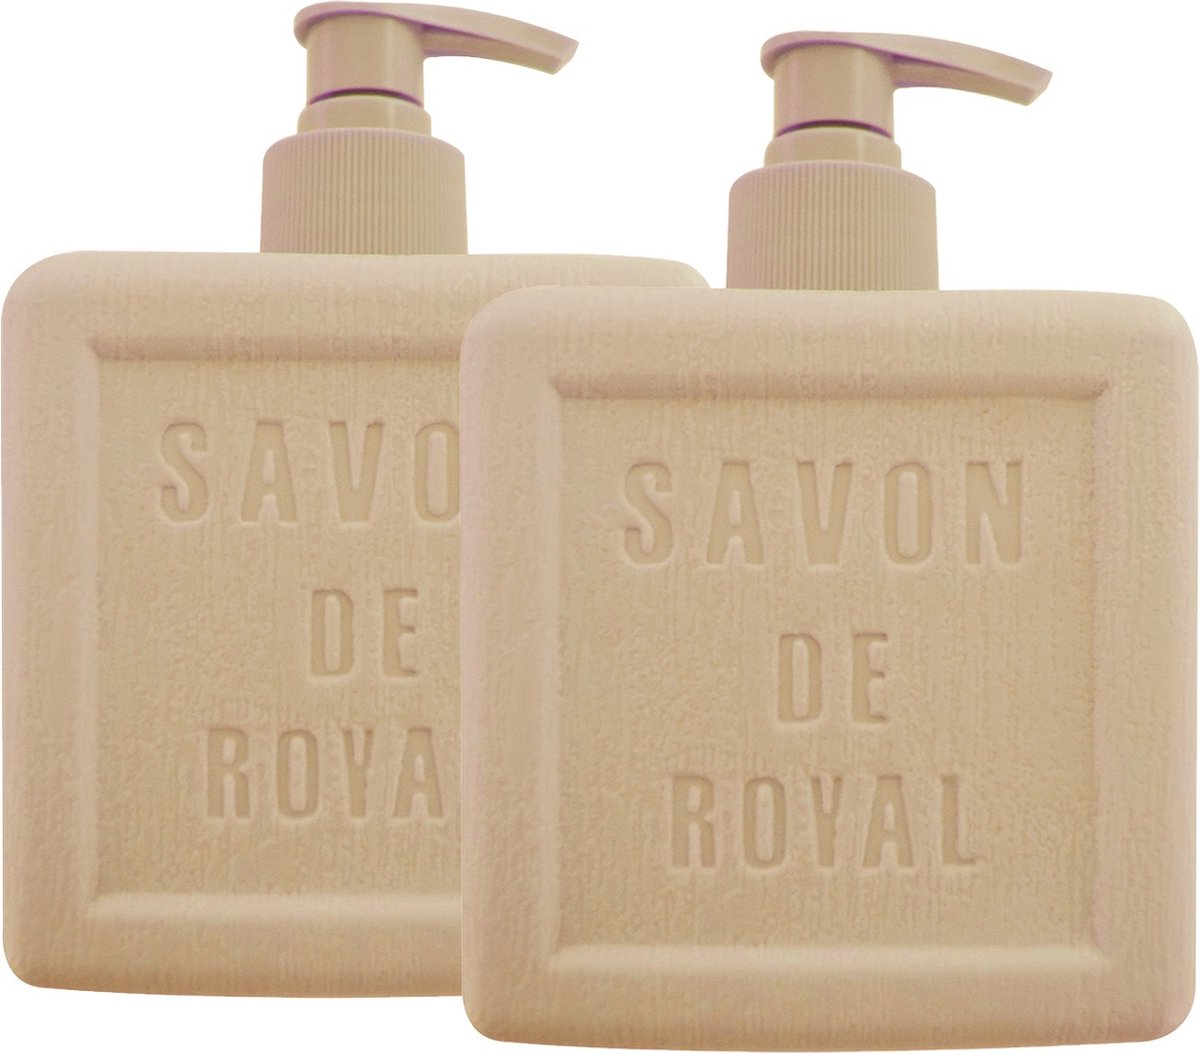 Savon De Royal Handzeep Provence Moisturizing Vegan Liquid Soap Cream 500 Ml